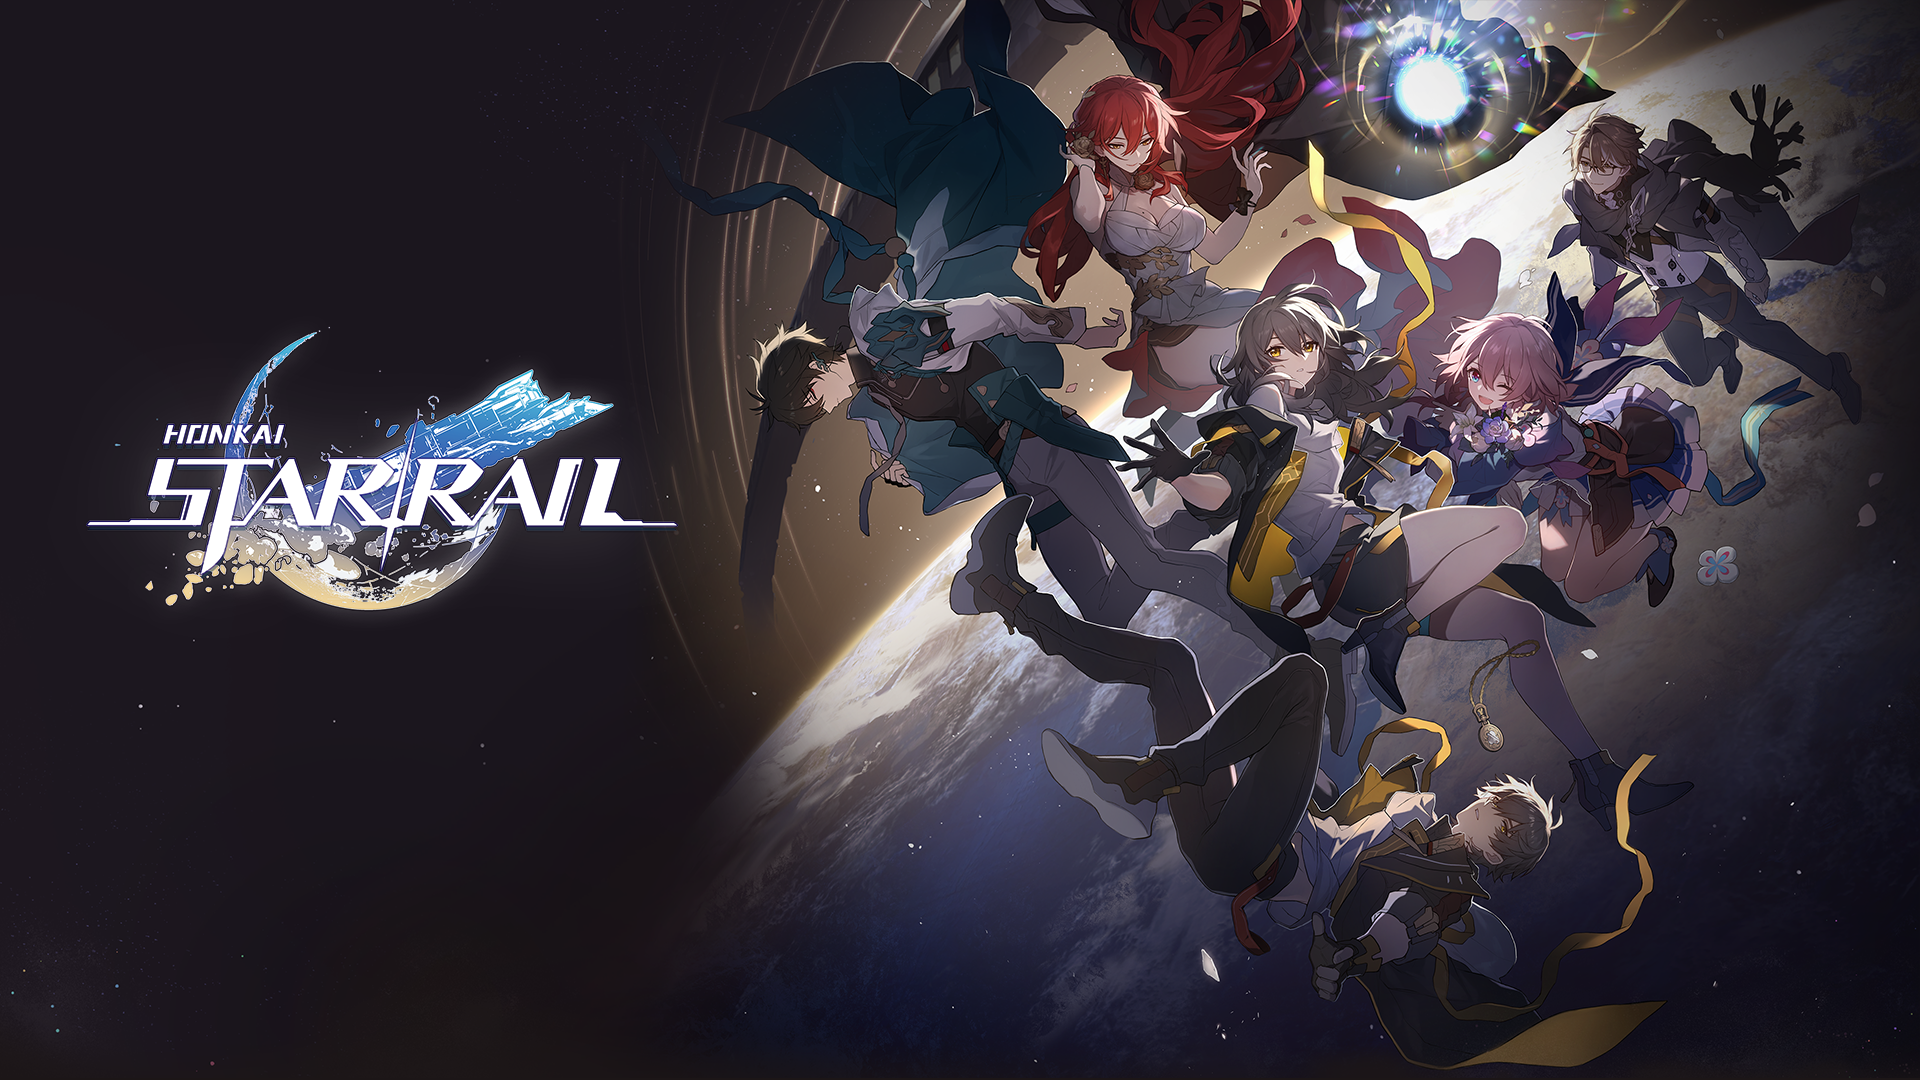 Honkai: Star Rail arribarà a PlayStation 5 a finals d’any